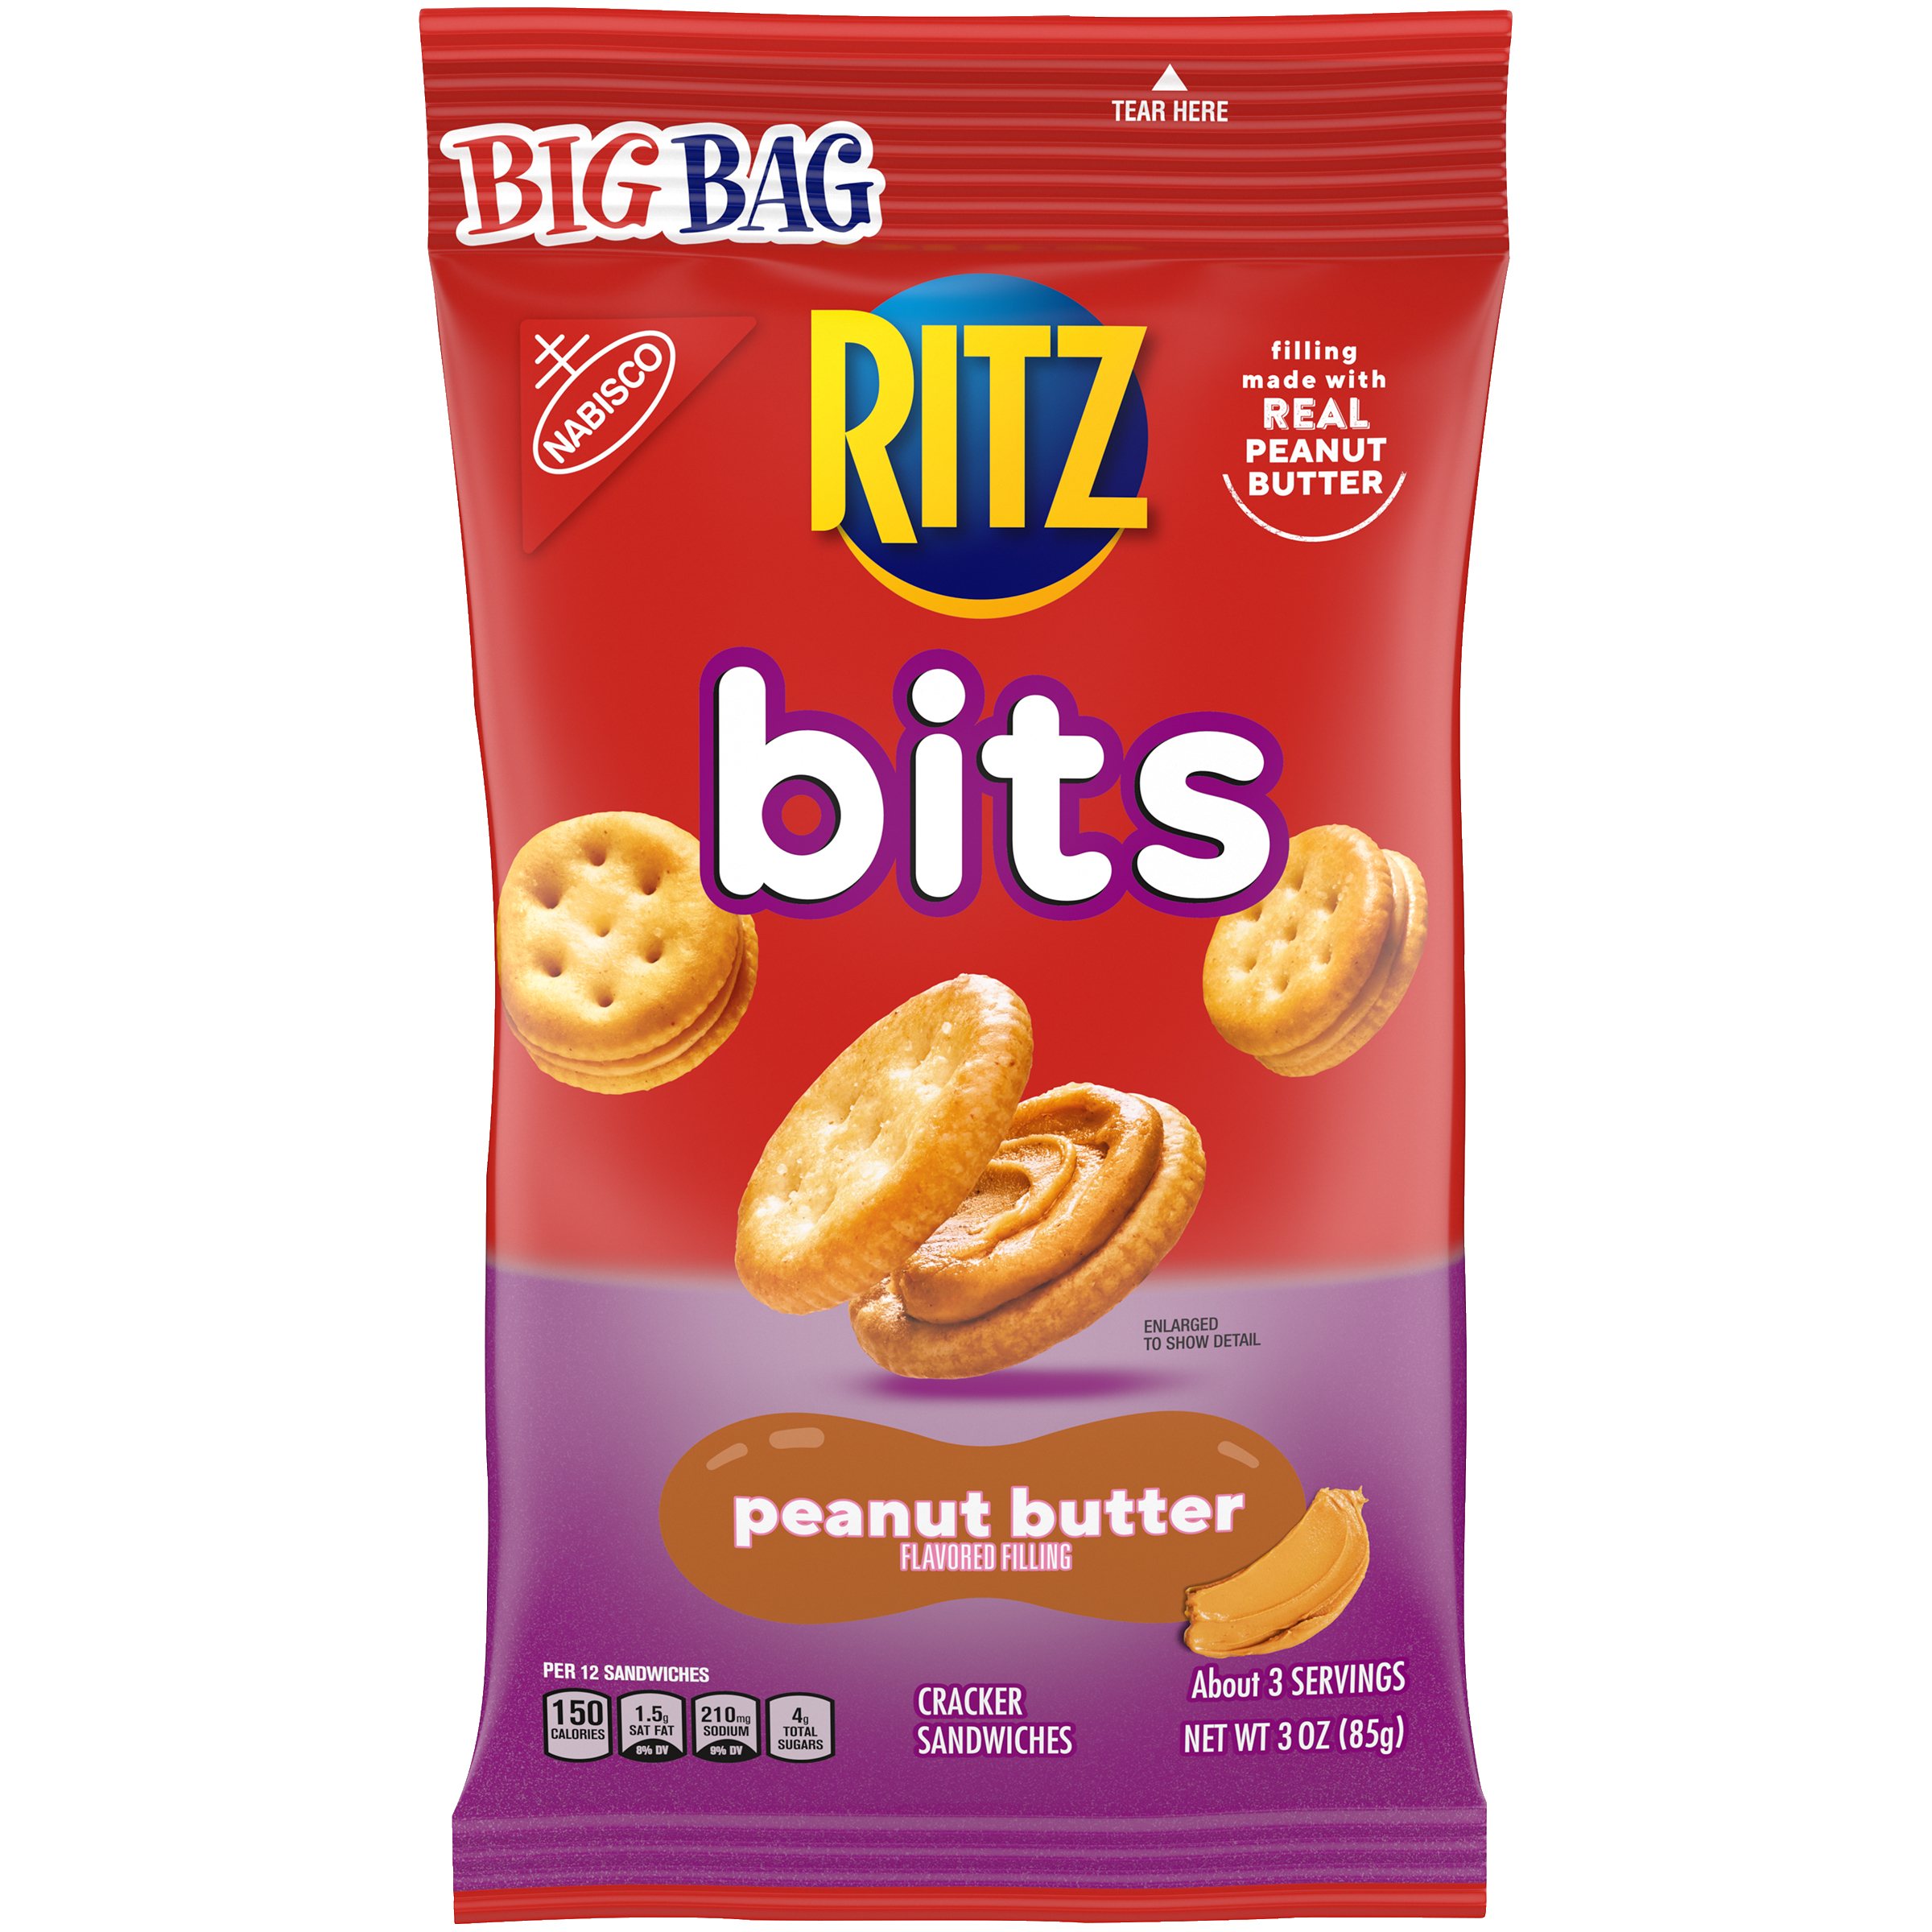 RITZ Bits Peanut Butter Sandwich Crackers, Big Bag, 3 oz